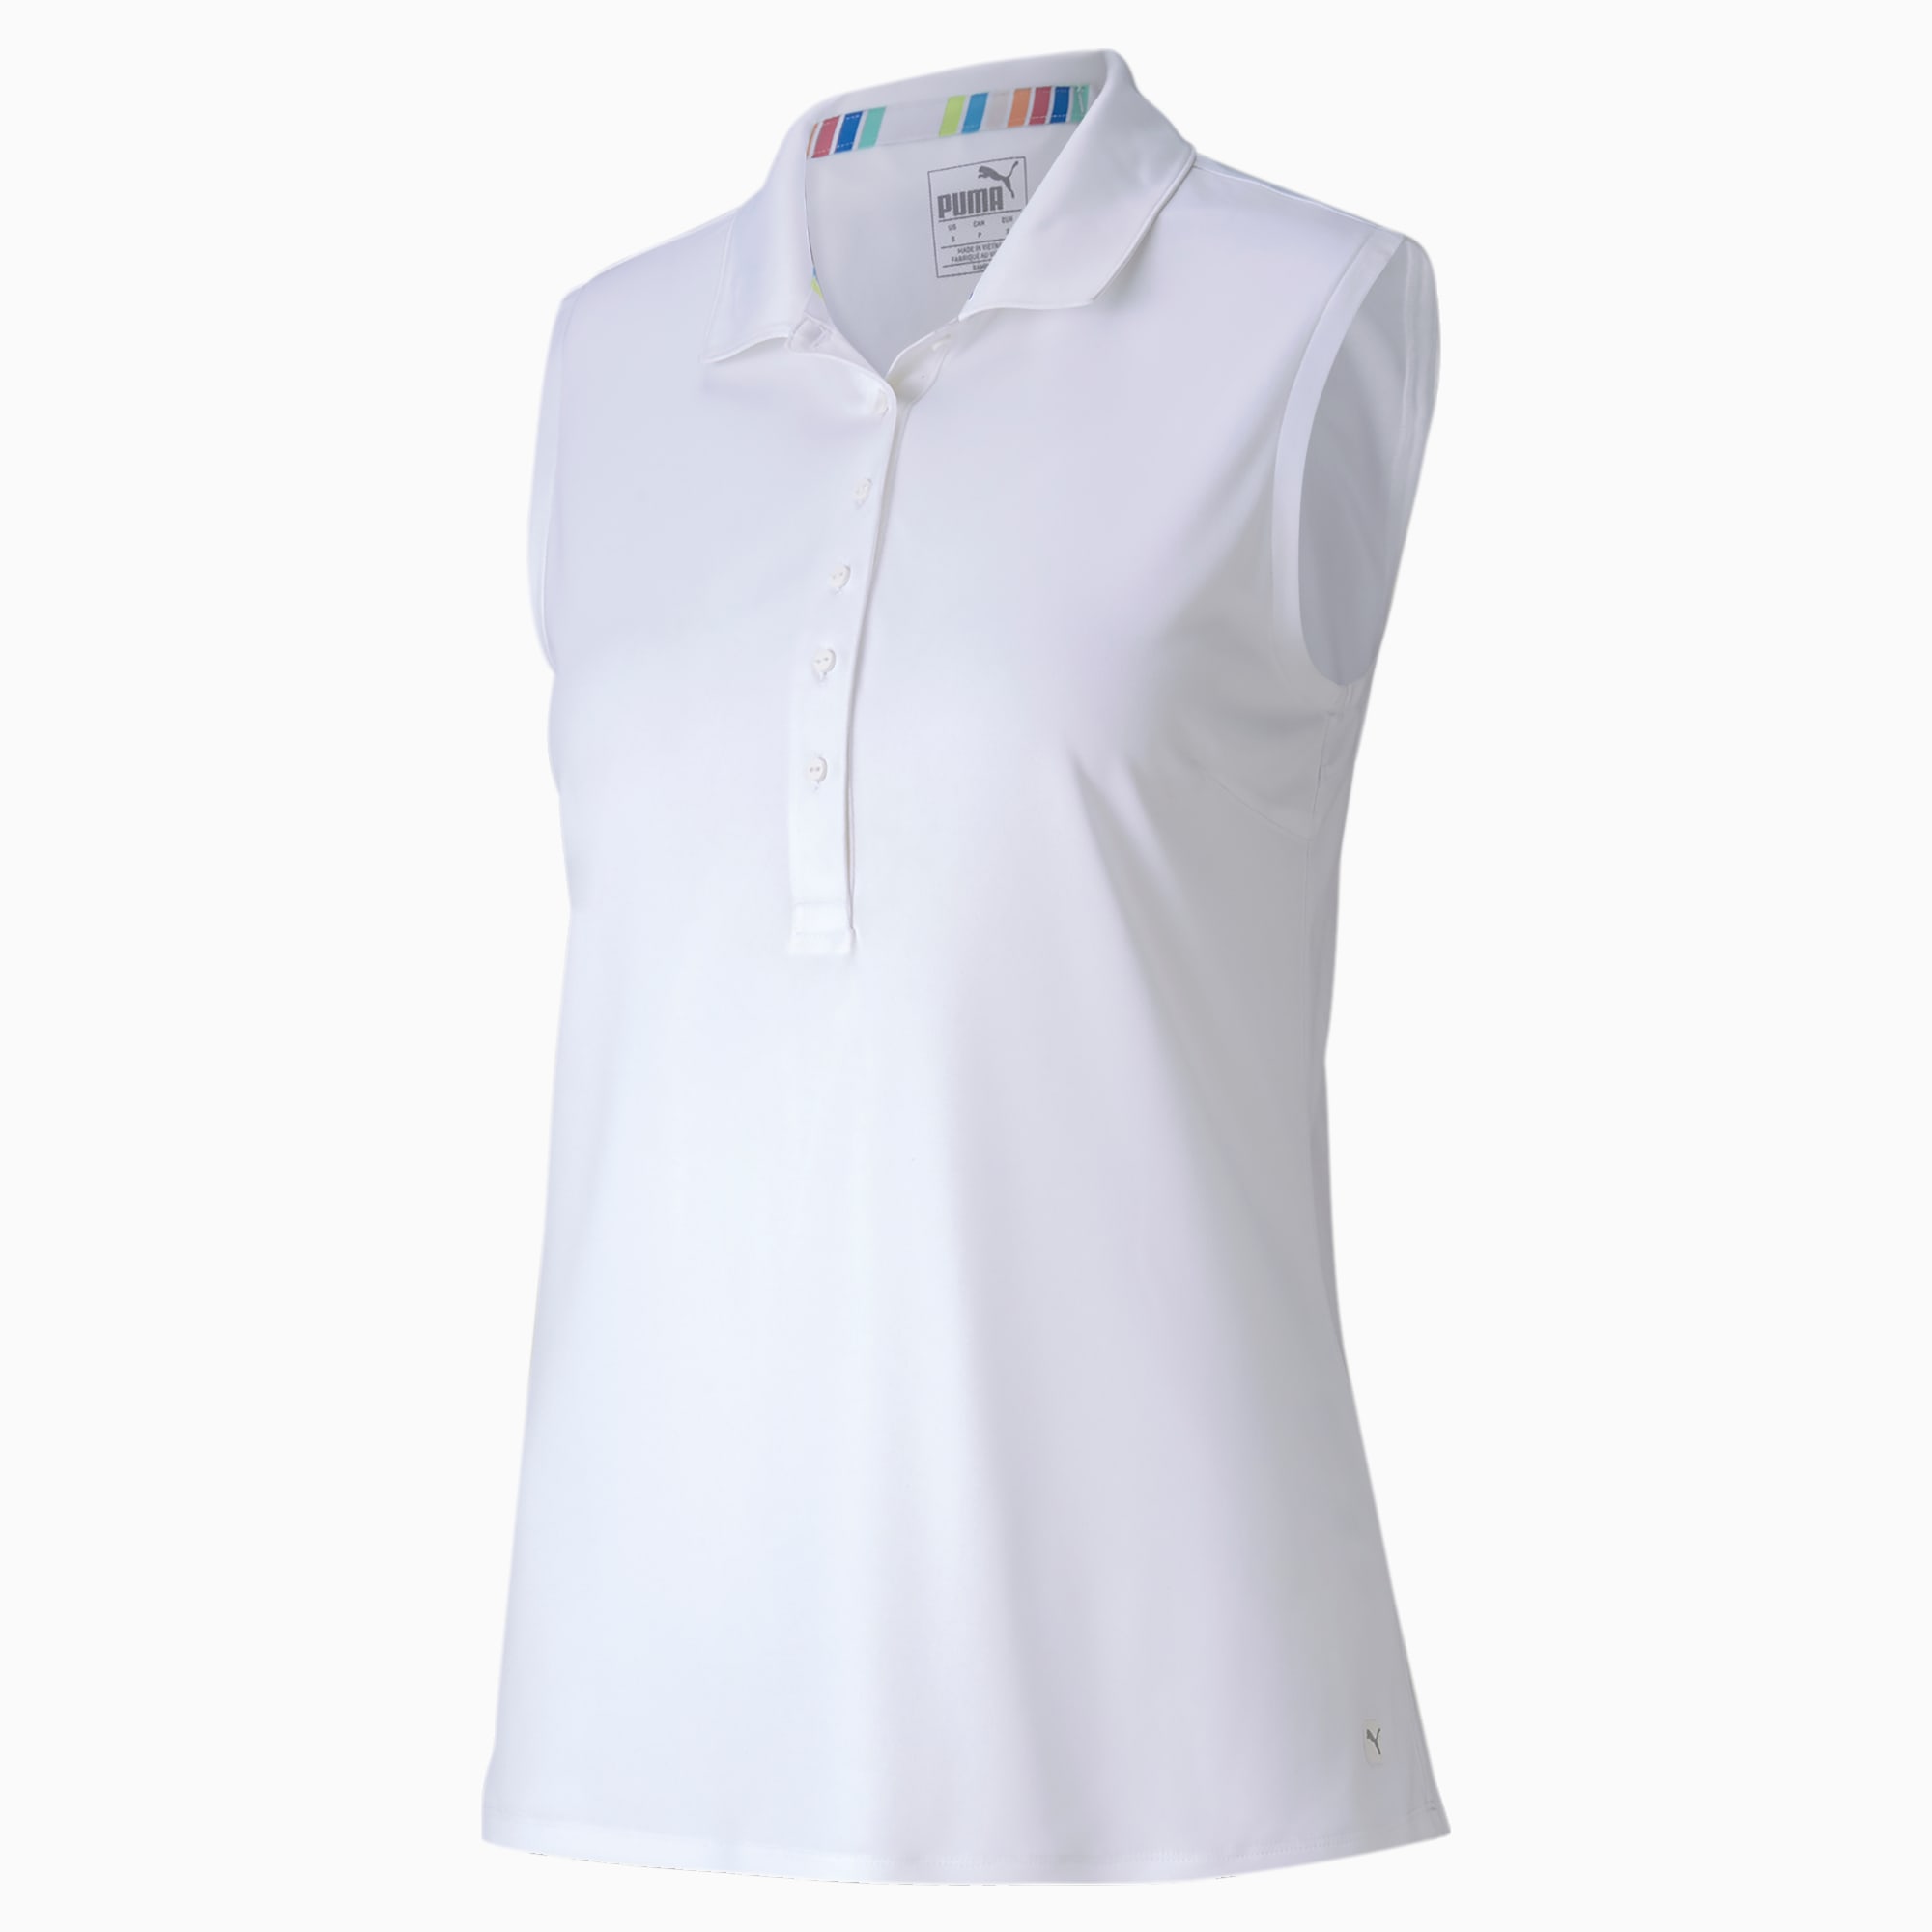 women's sleeveless polo shirts